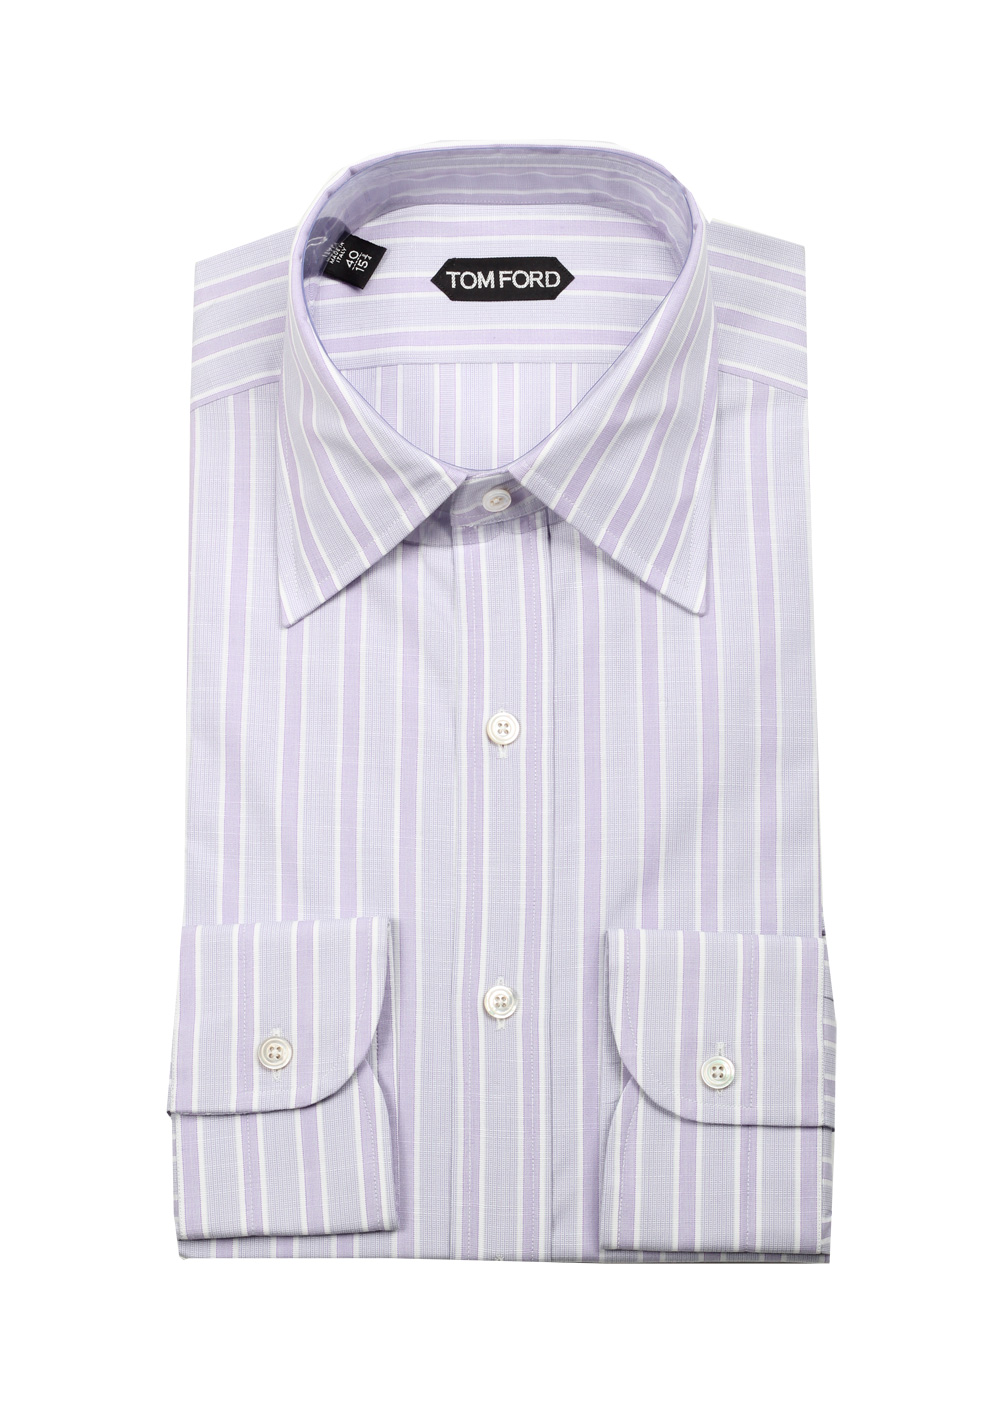 TOM FORD Striped Purple High Collar Dress Shirt Size 40 / 15,75 U.S ...